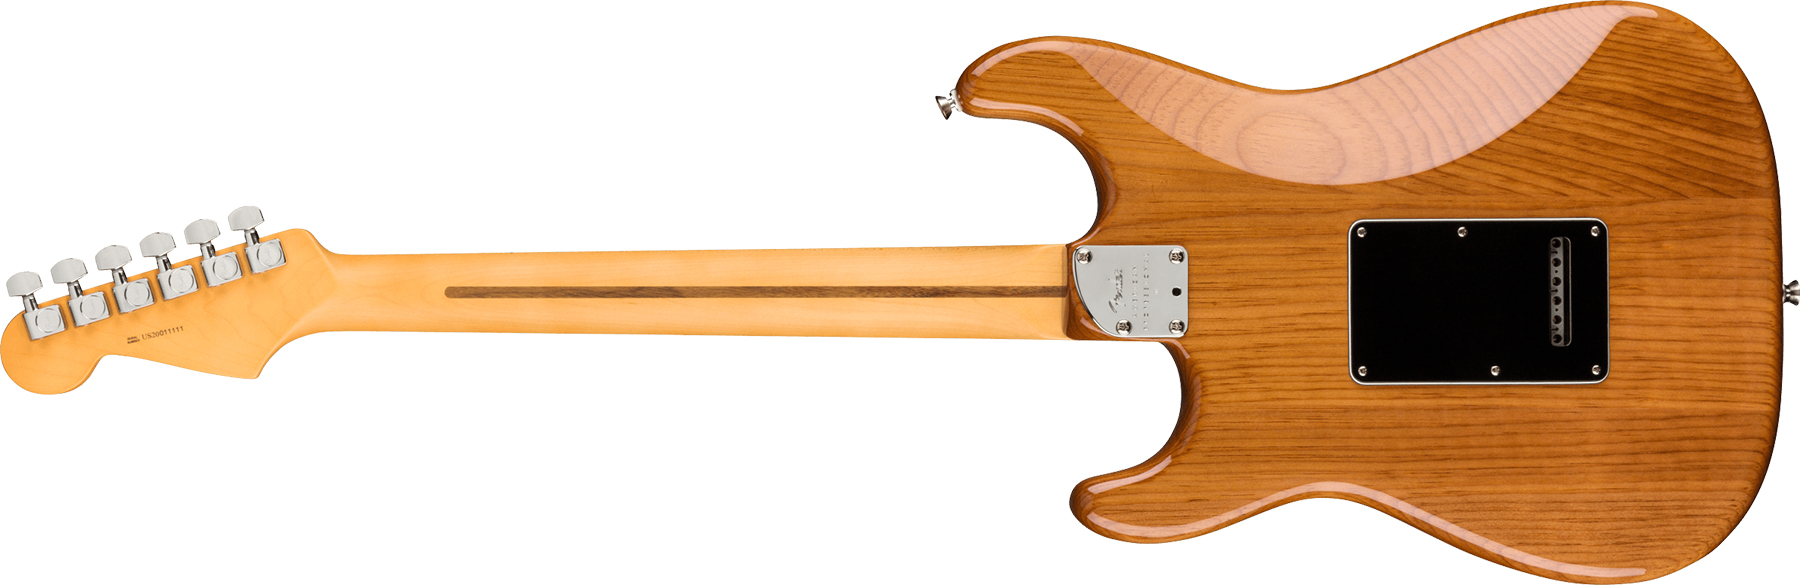 Fender Strat American Professional Ii Usa Mn - Roasted Pine - Str shape electric guitar - Variation 1